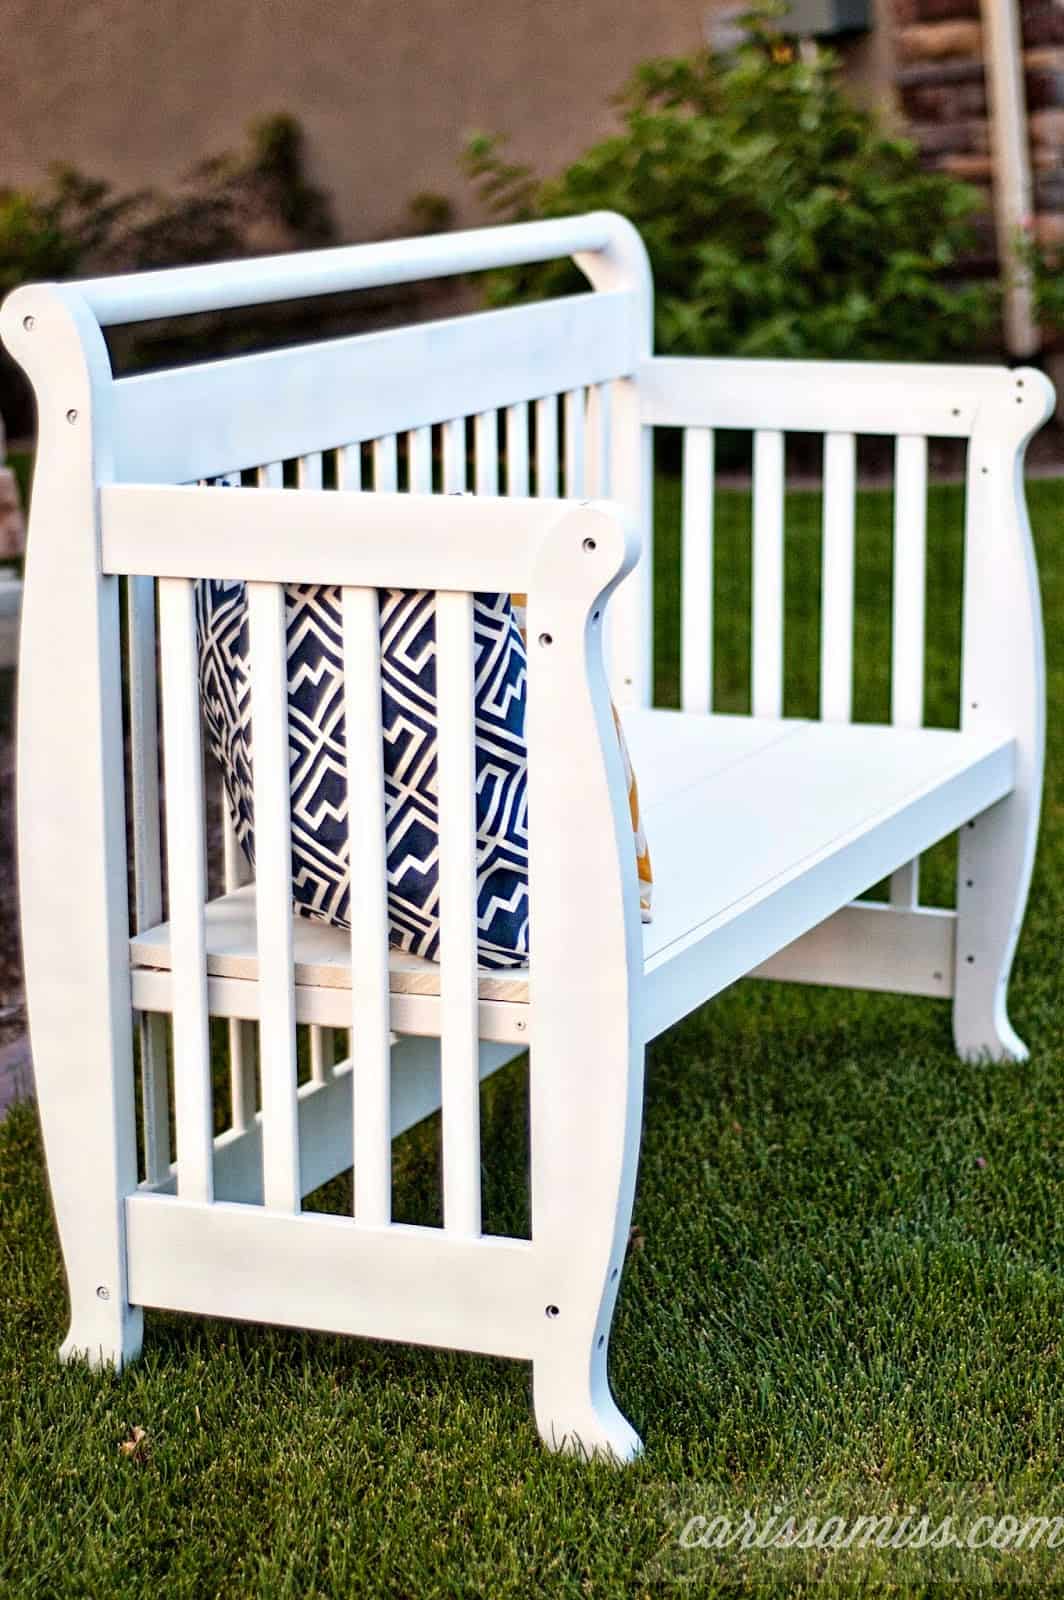 Crib to bench tutorial #DIY #paintedfurniture #repurpose #upcycle - www.countrychicpaint.com/blog